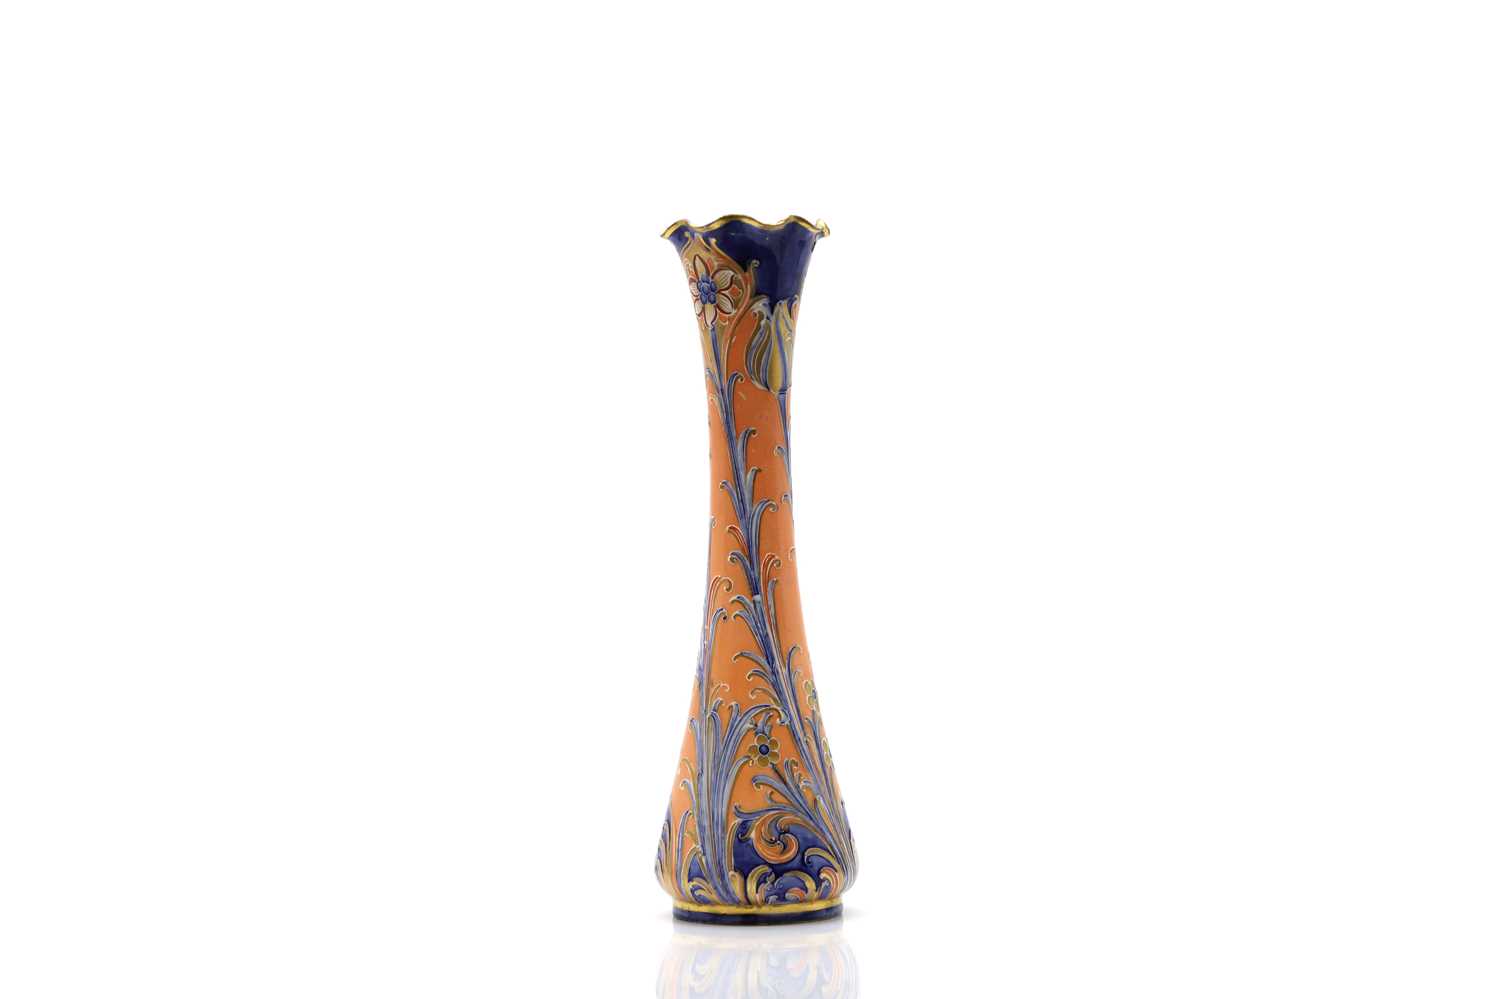 A James Macintyre & Co Florian ware 'Alhambra' vase